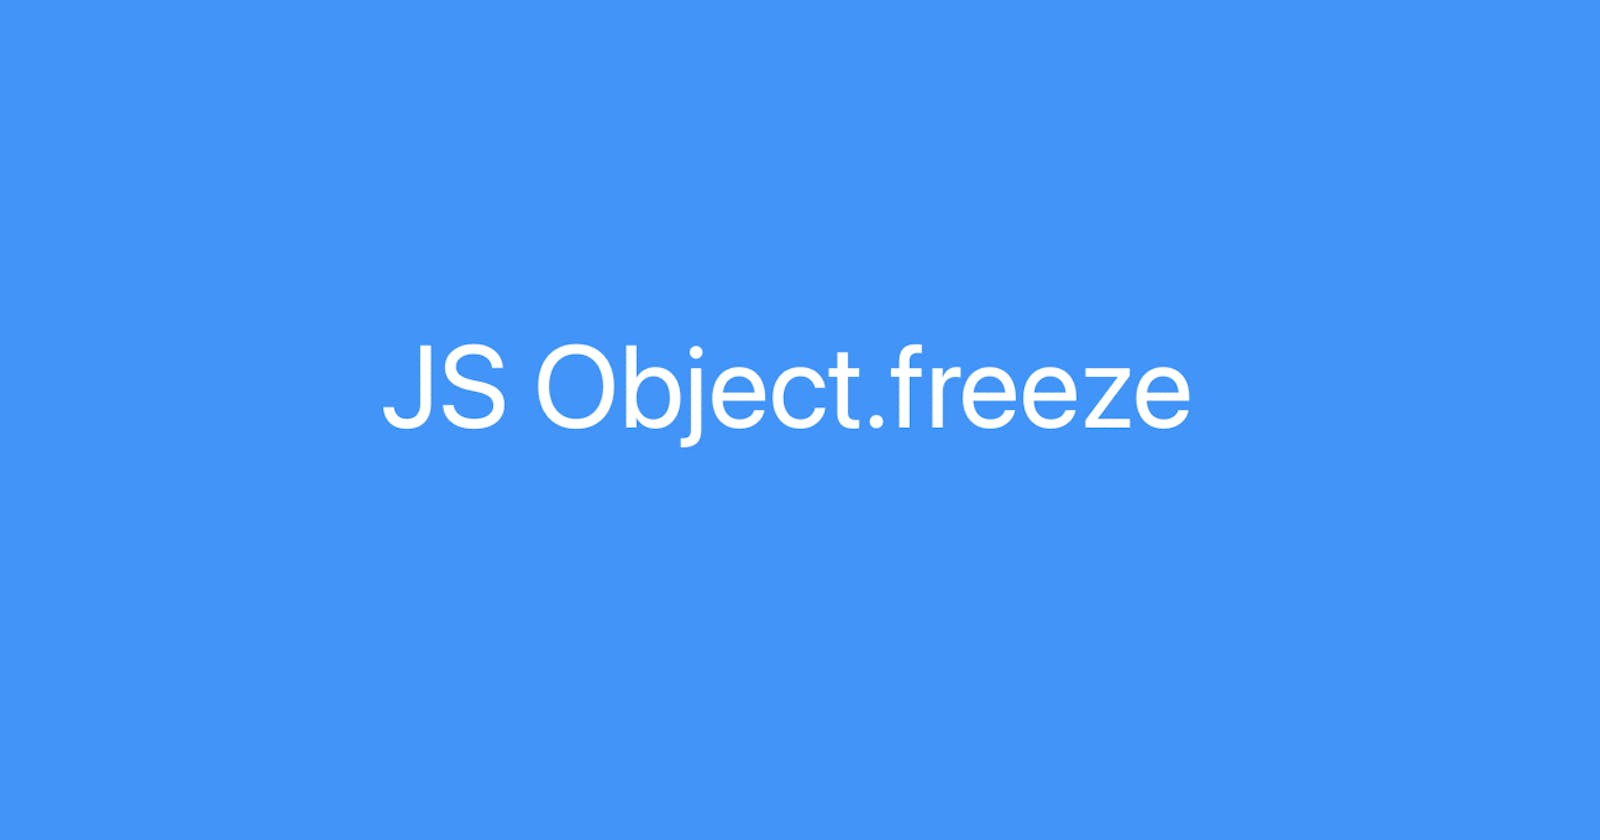 JS Object.freeze